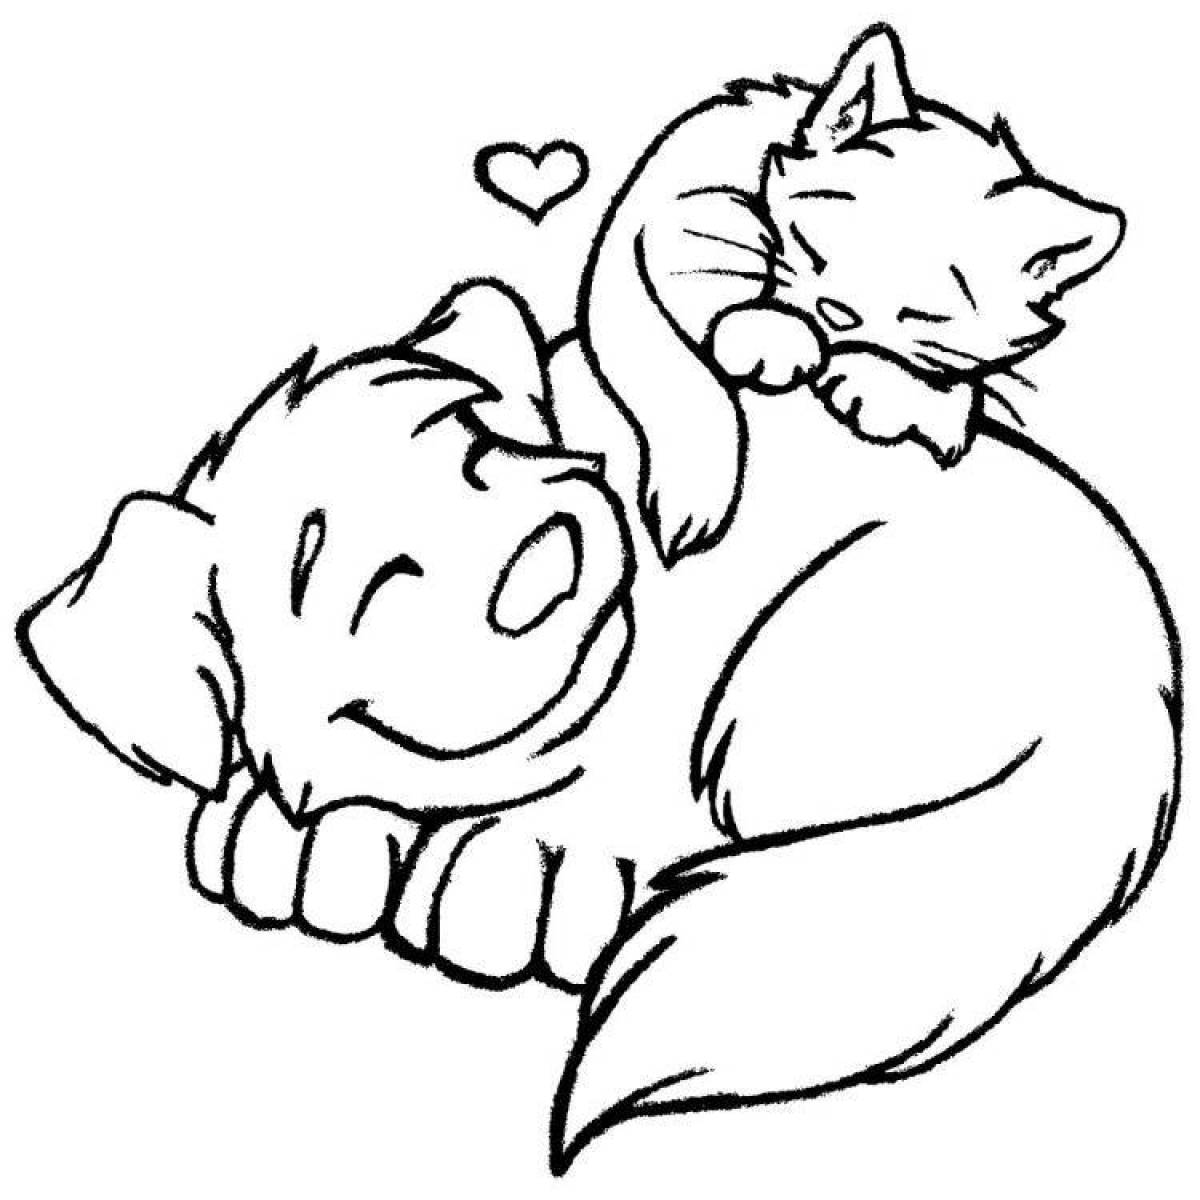 Delicate coloring hugs